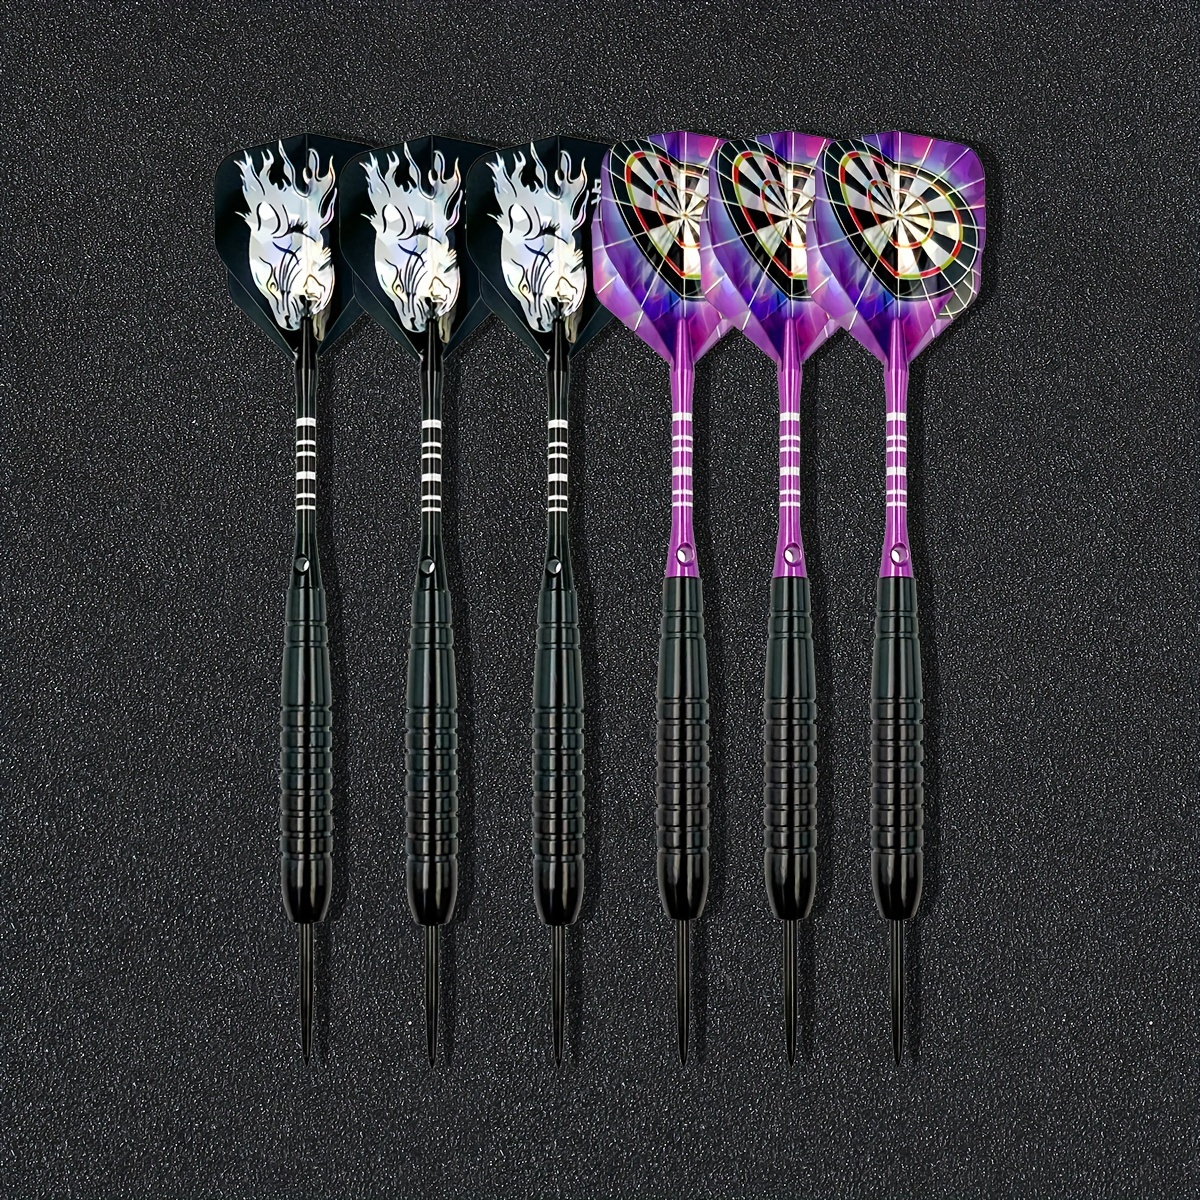 

3pcs/set 24g Premium Steel Tip Darts Set - Professional Darts, Metal Tip Darts Aluminum Shafts For Dart Lover Player